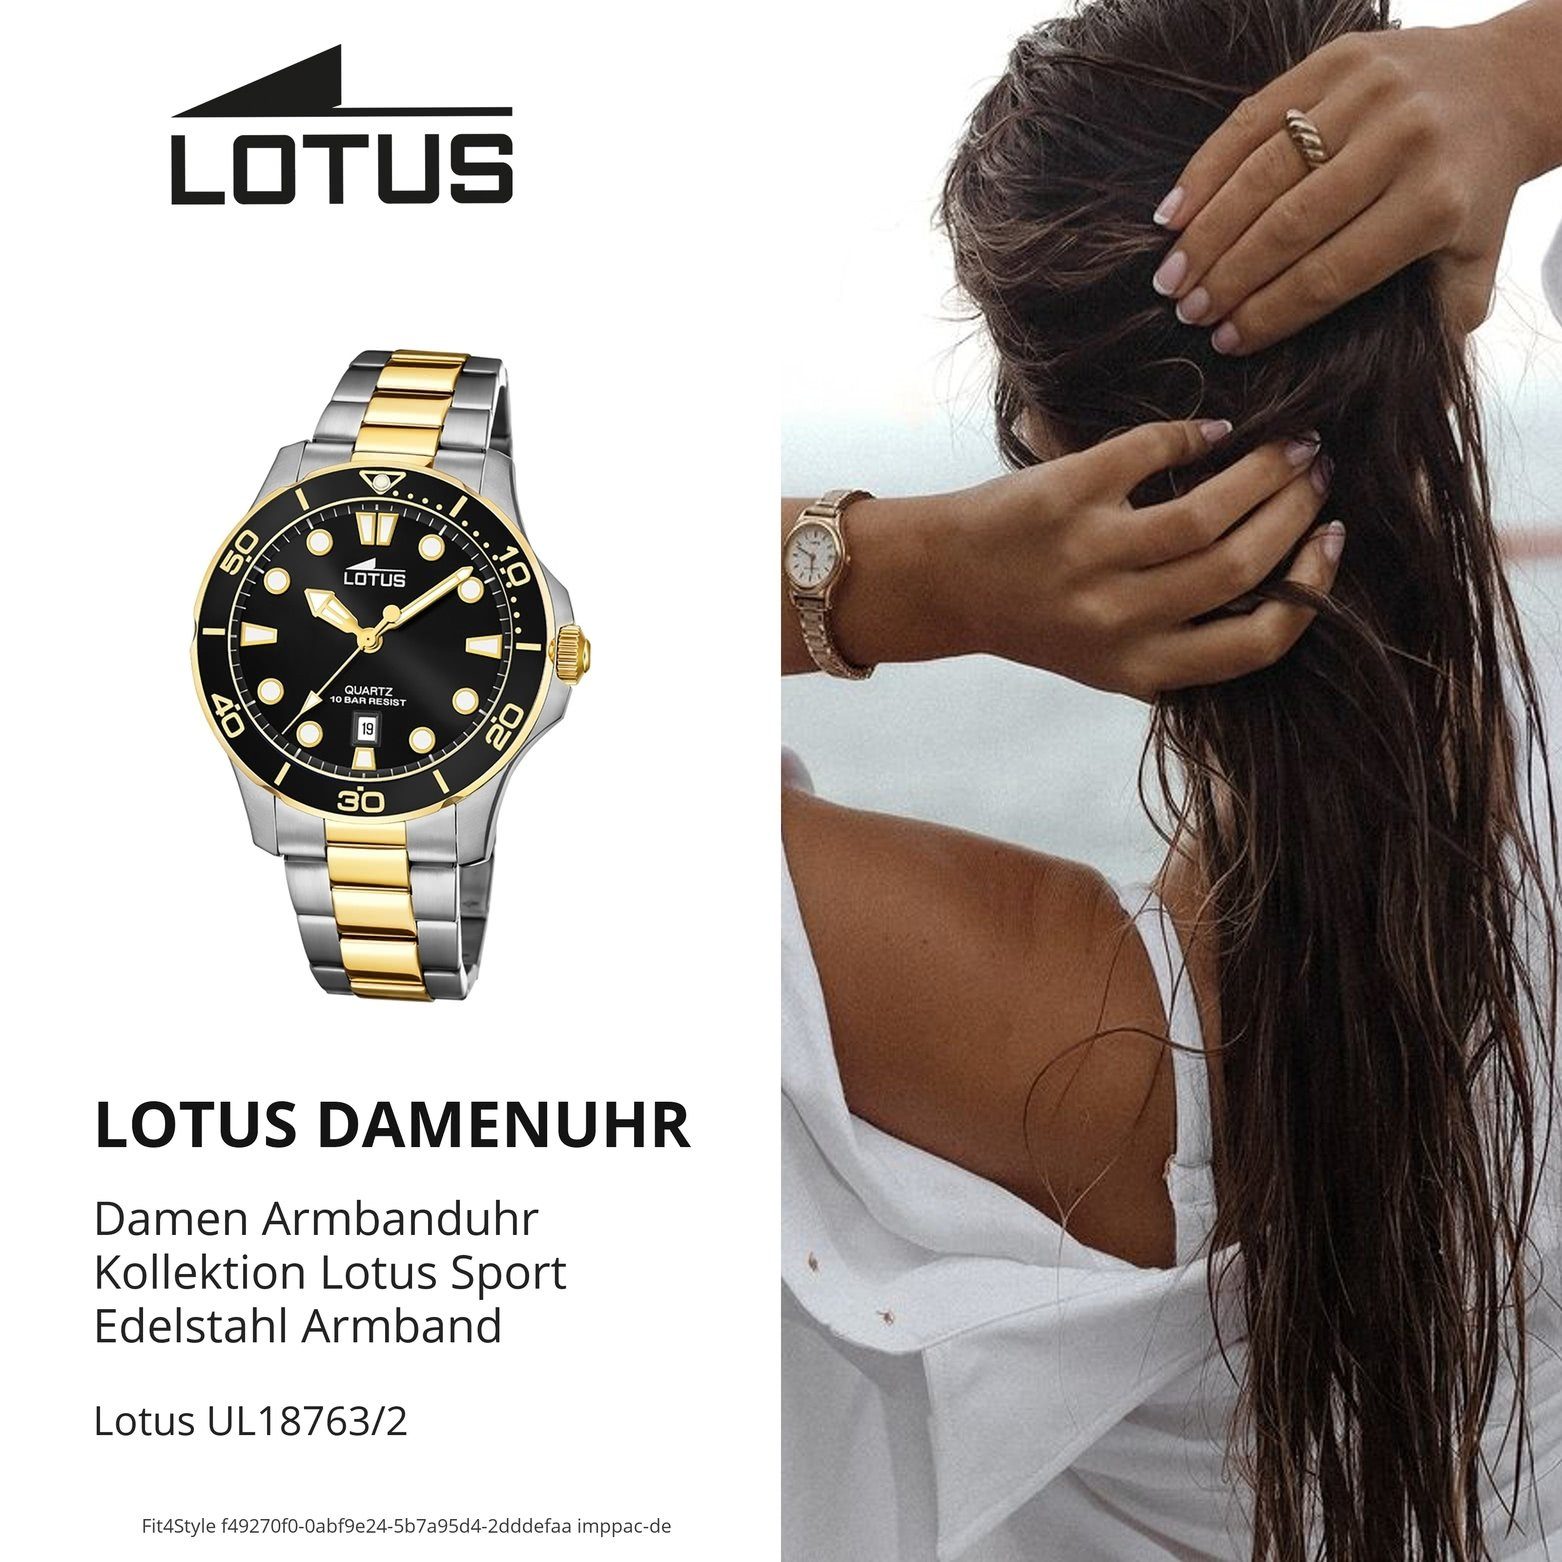 Sport Lotus Lotus Edelstahlarmband 39mm) rund, Quarzuhr mittel gold Damenuhr silber, Armbanduhr (ca. 18763/2, Damen